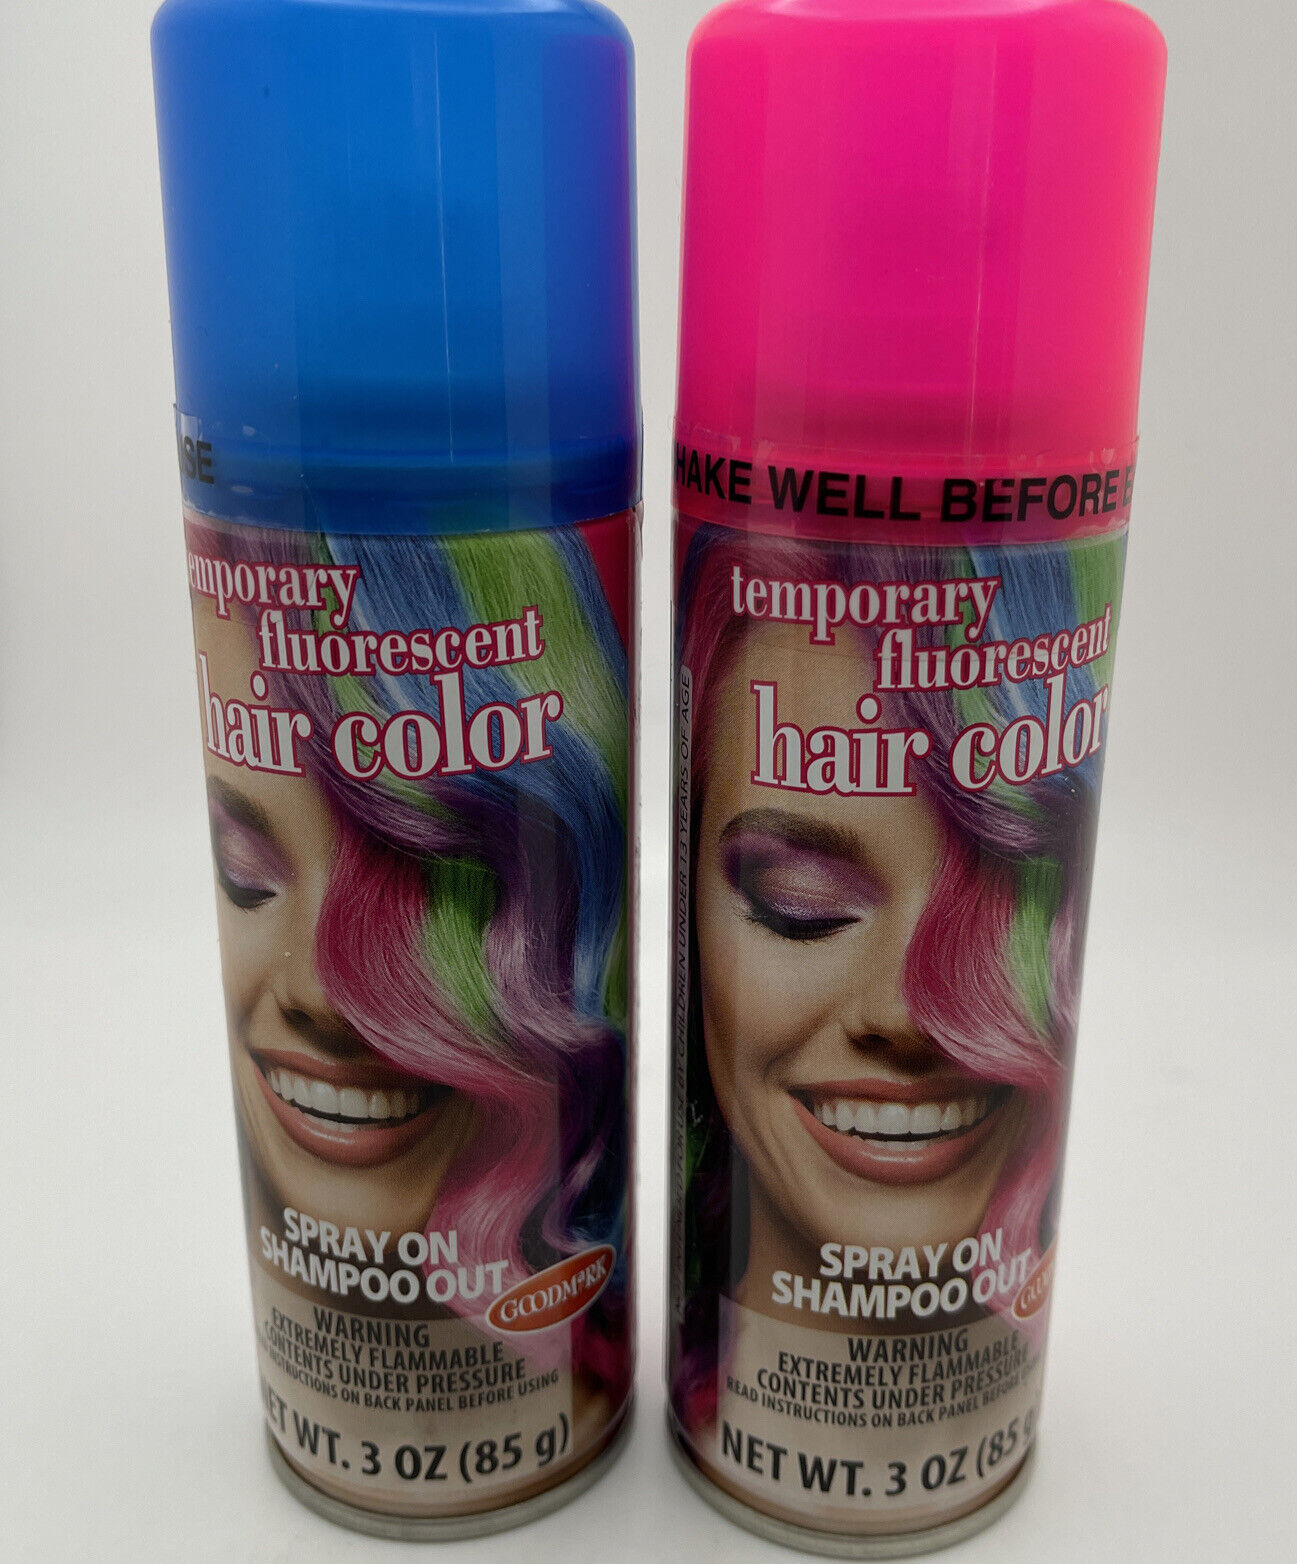 Goodmark Temporary Fluorescent Hair Color, 3 oz, 2 Pack, Pink & Blue  73895500566 | eBay